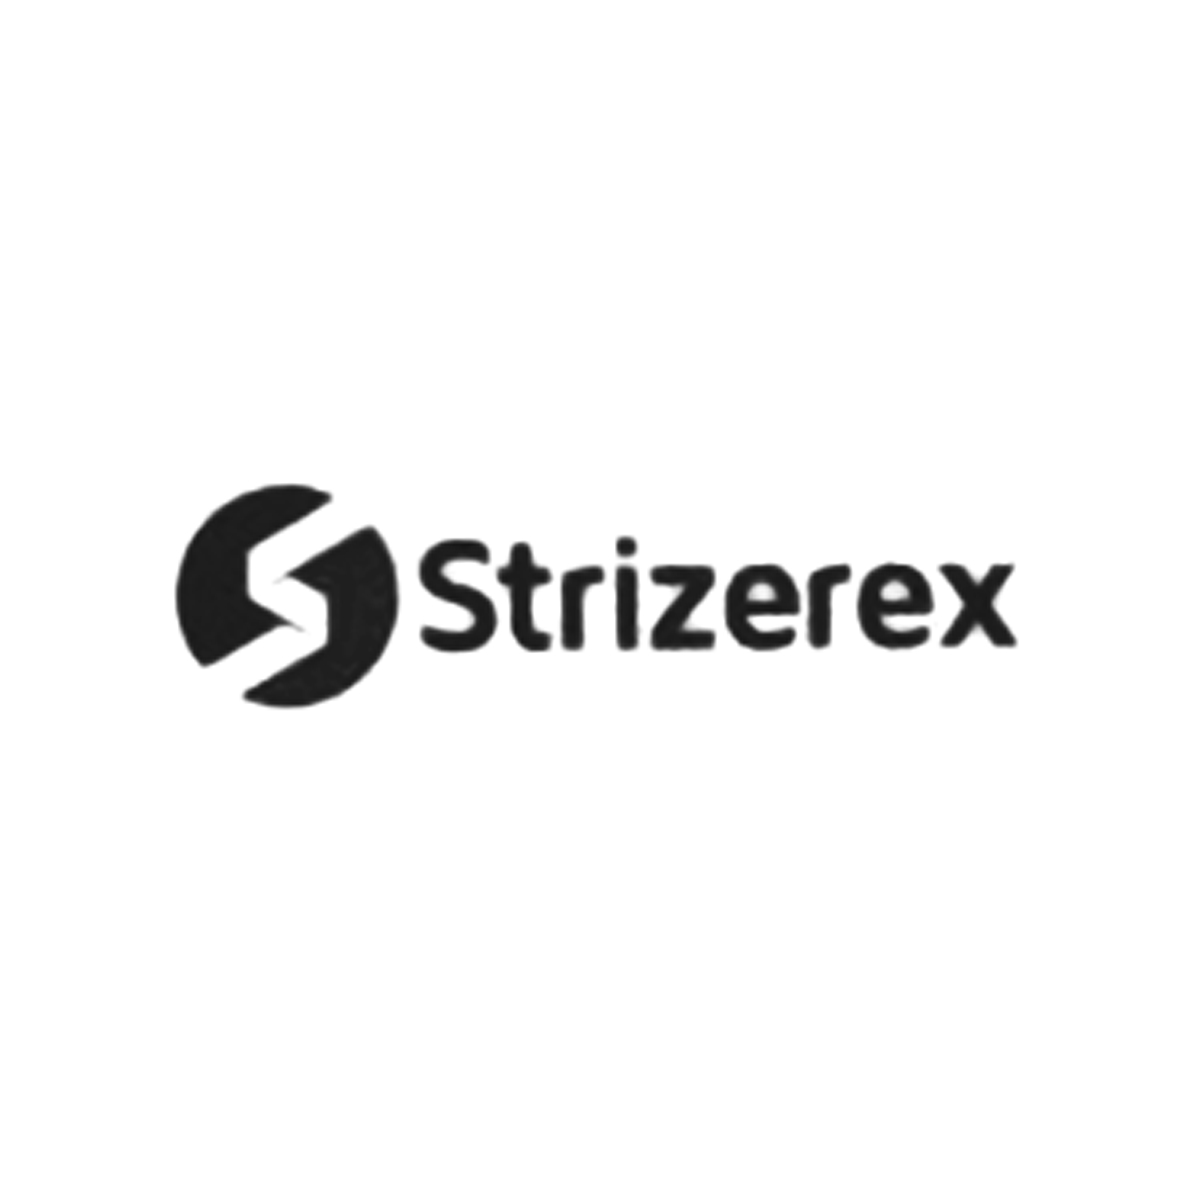 Strizirex